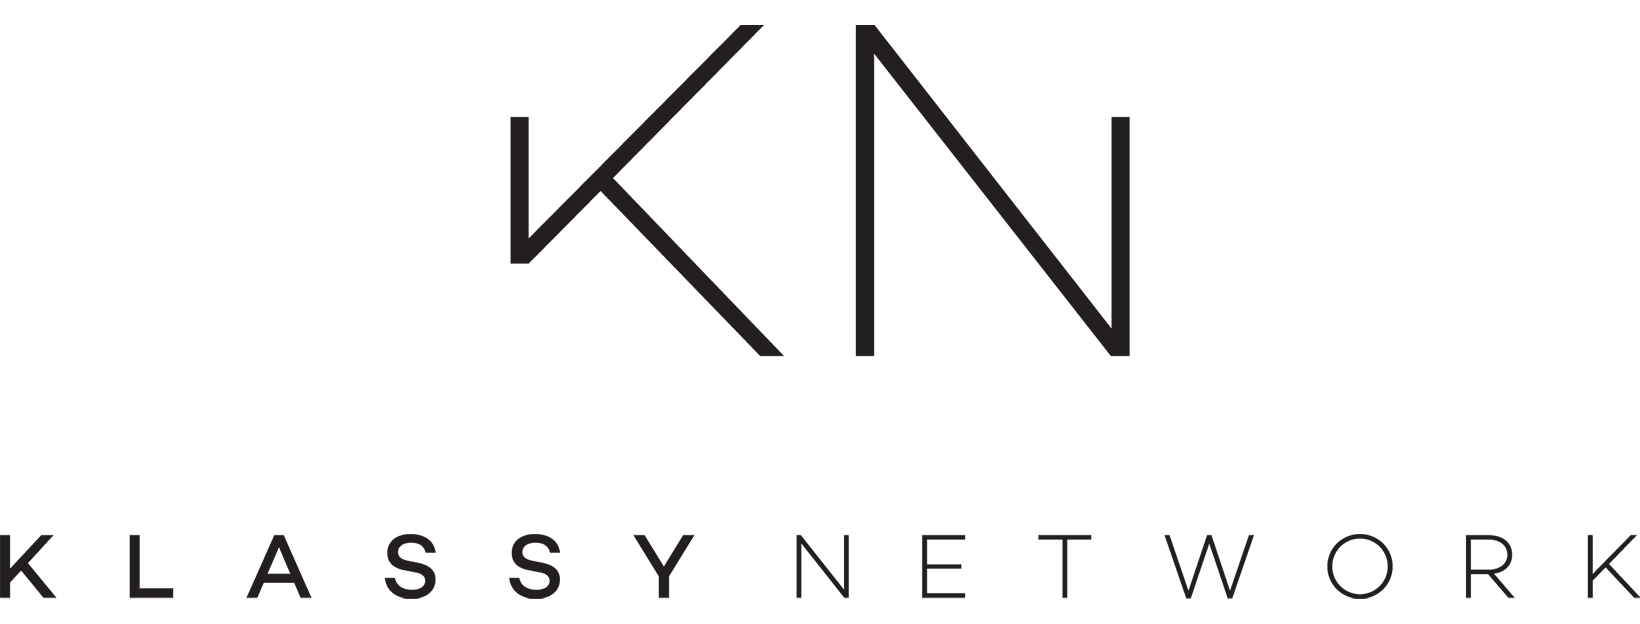 Klassy Network by Klassy Network